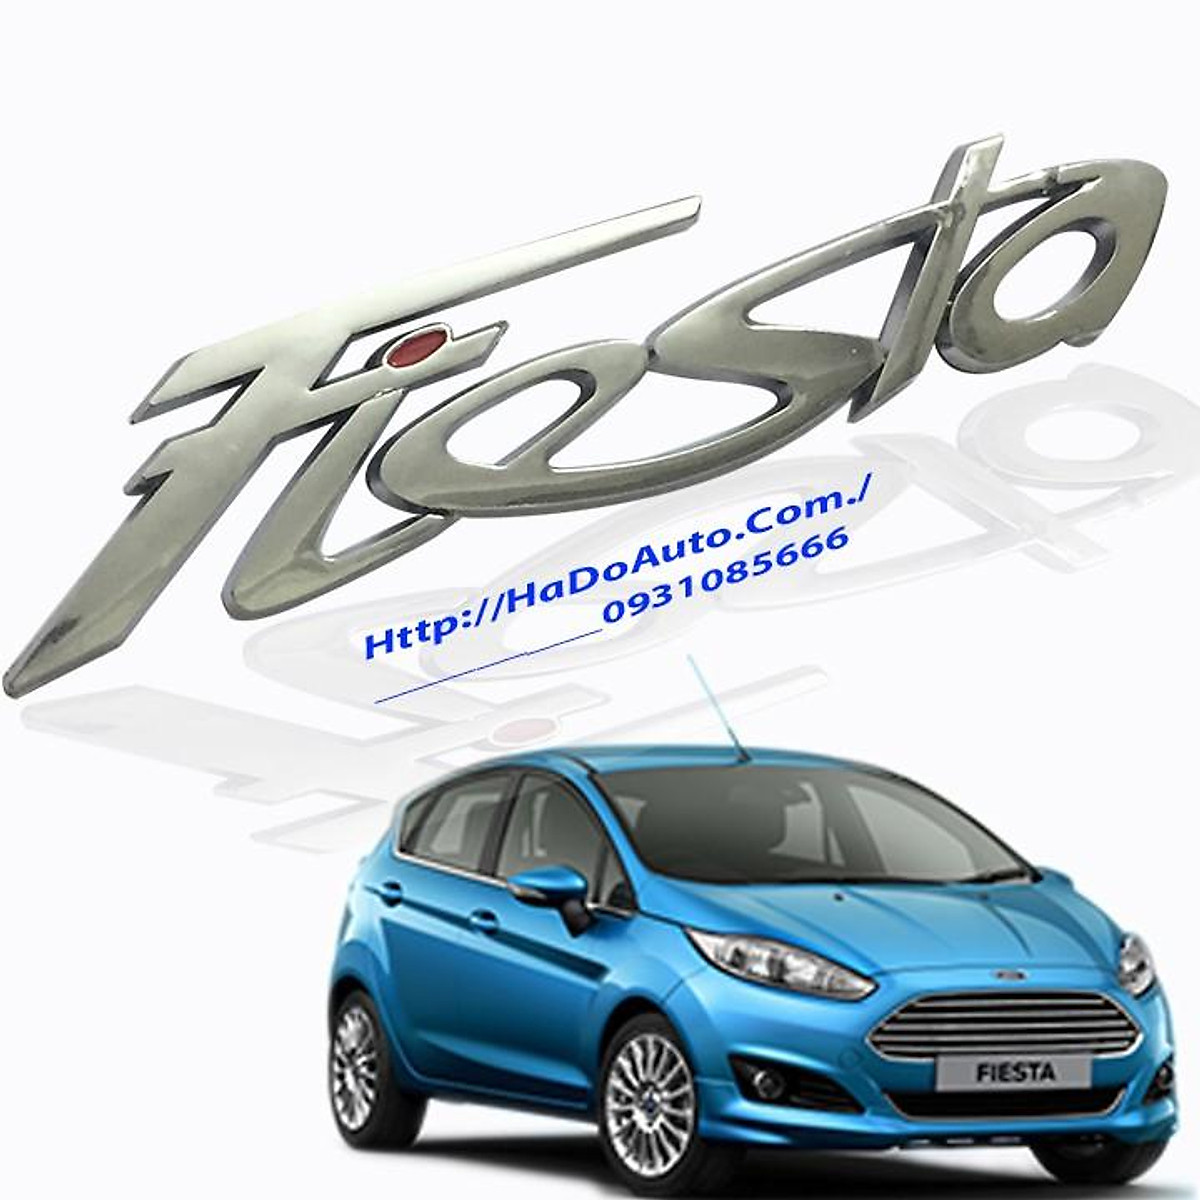 Ford Fiesta Titanium 4 Cửa Sedan 2018 Giá Tốt Nhất TpHCM  City Ford  Ford  Bình Triệu